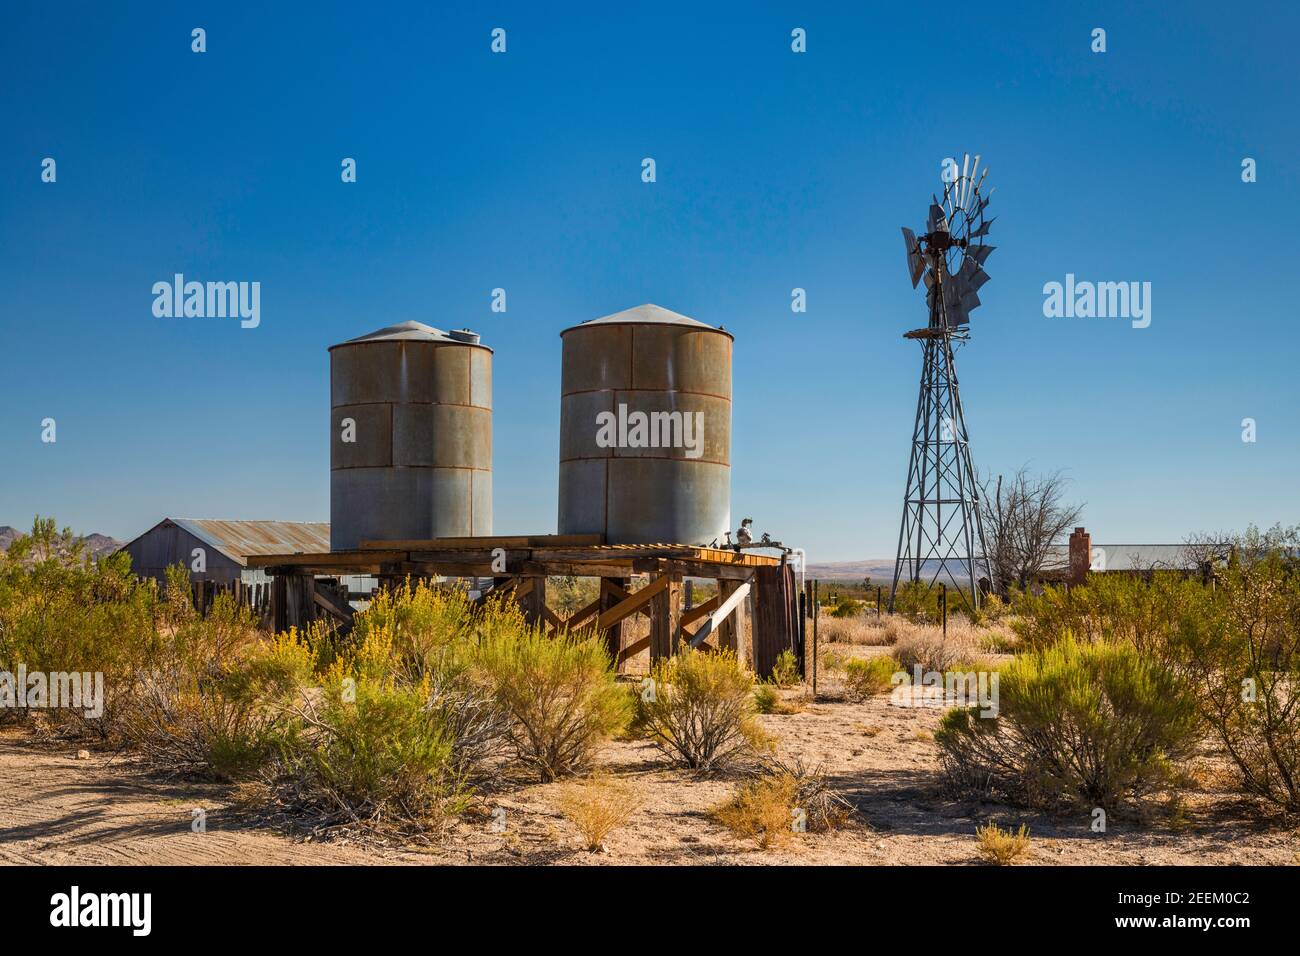 Water tanks, water pump at ranch at Lanfair site, Lanfair Valley, Mojave National Preserve, California, USA Stock Photo